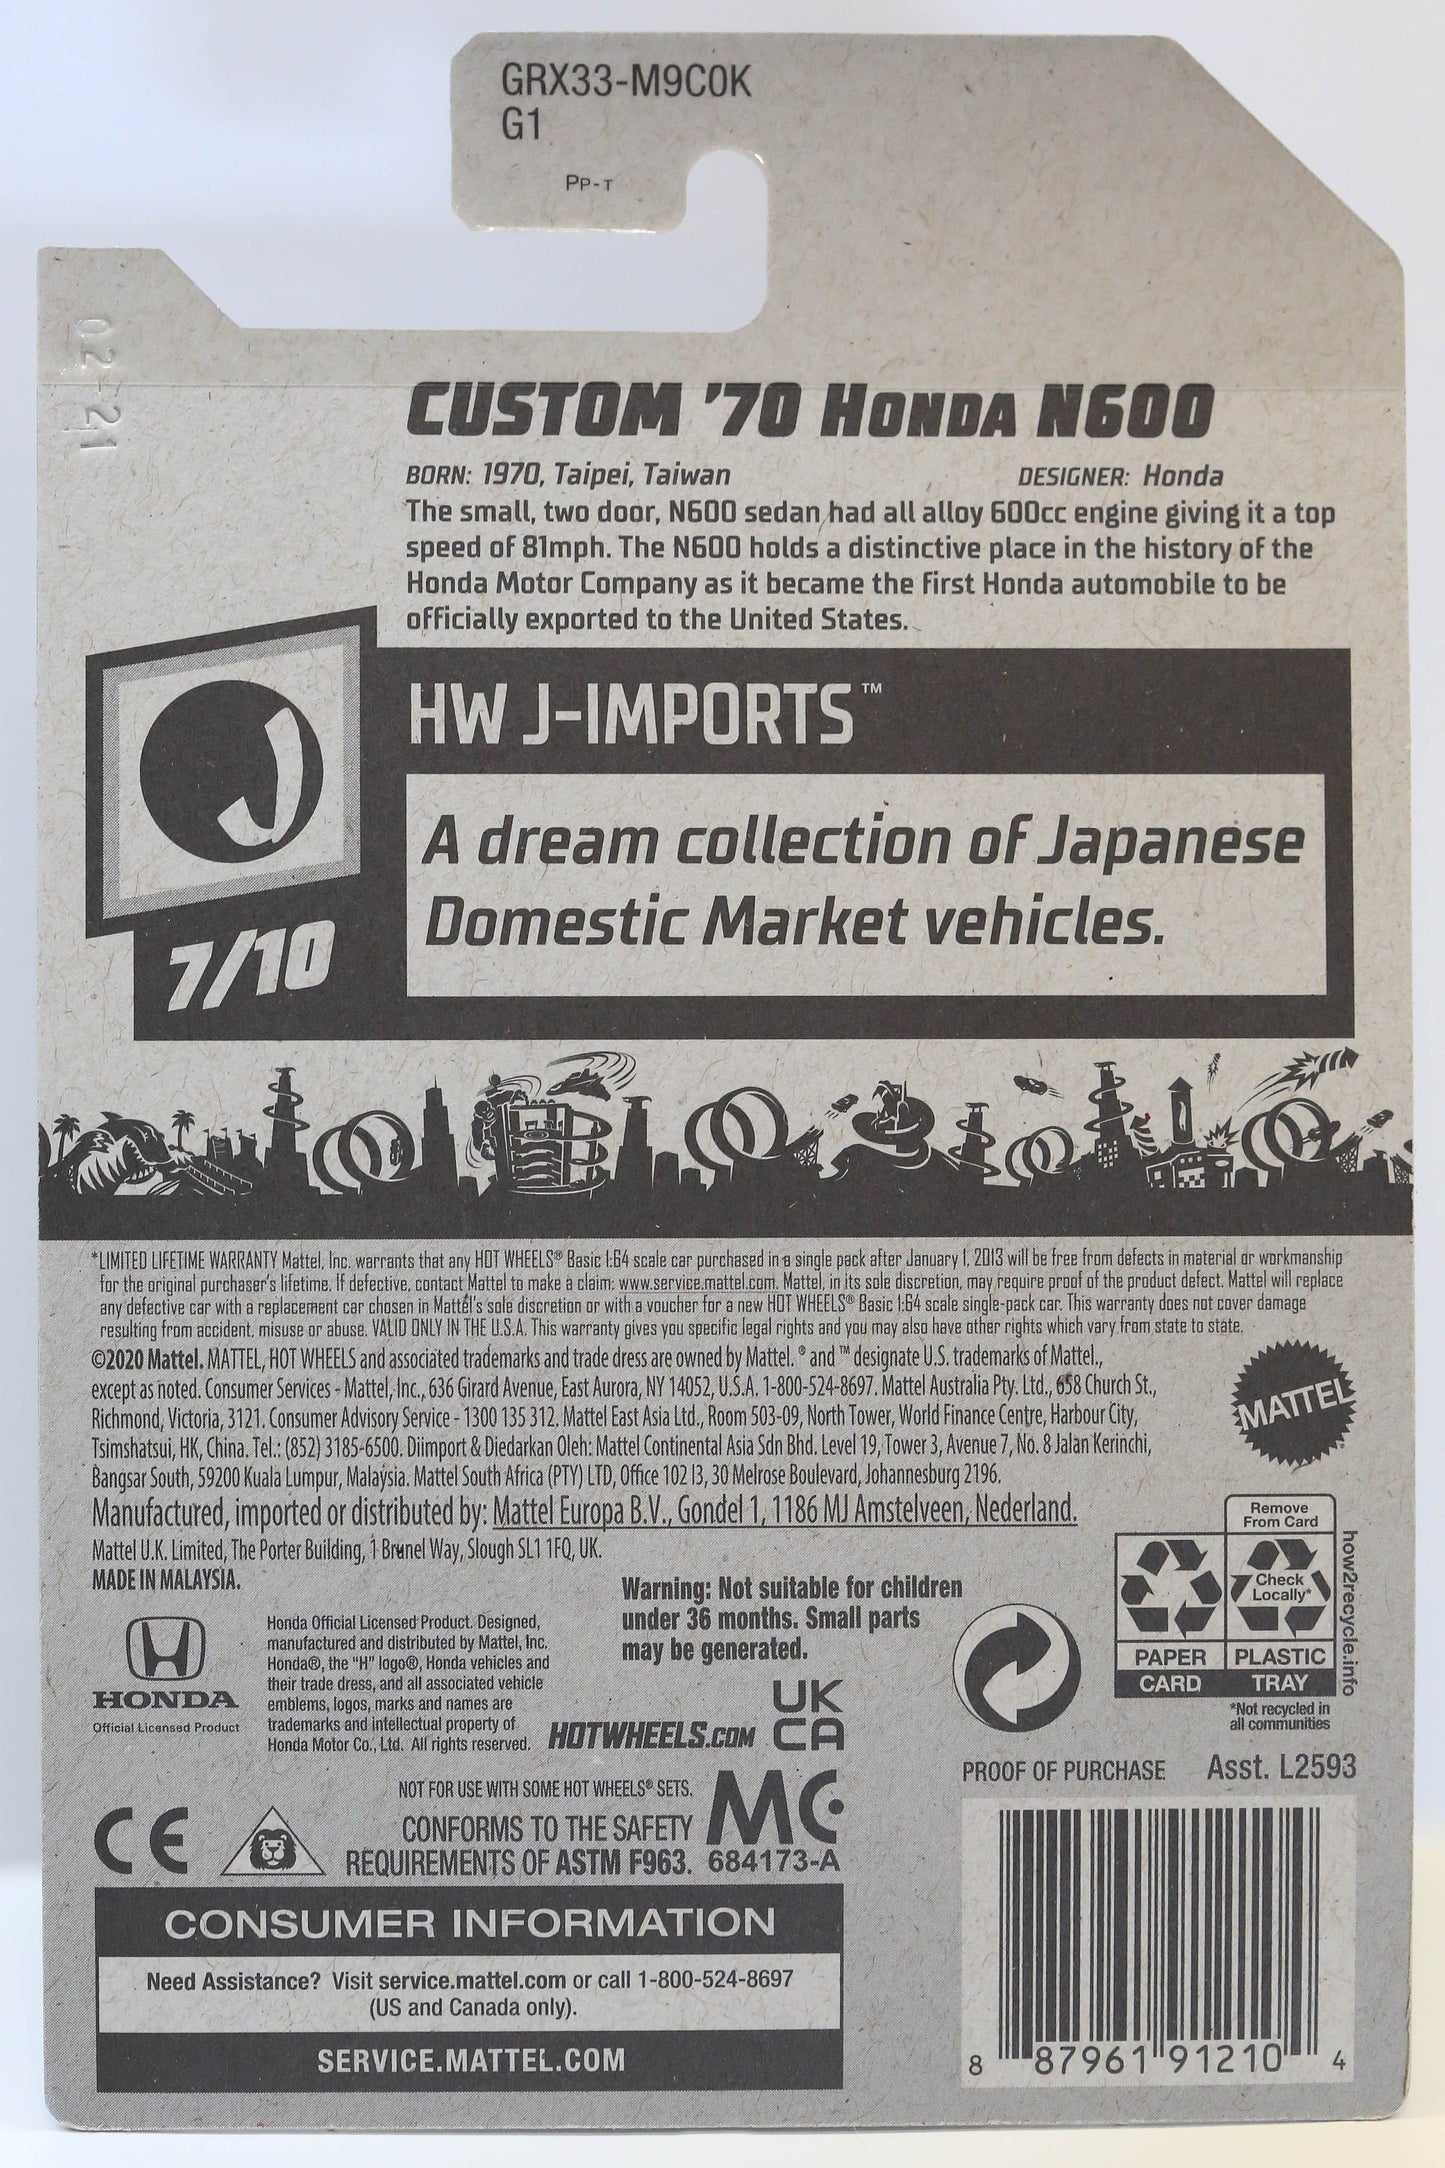 Hot Wheels CUSTOM '70 Honda N600 HW J-Imports GRX33 - Plus (+) a Bonus Hot Wheel